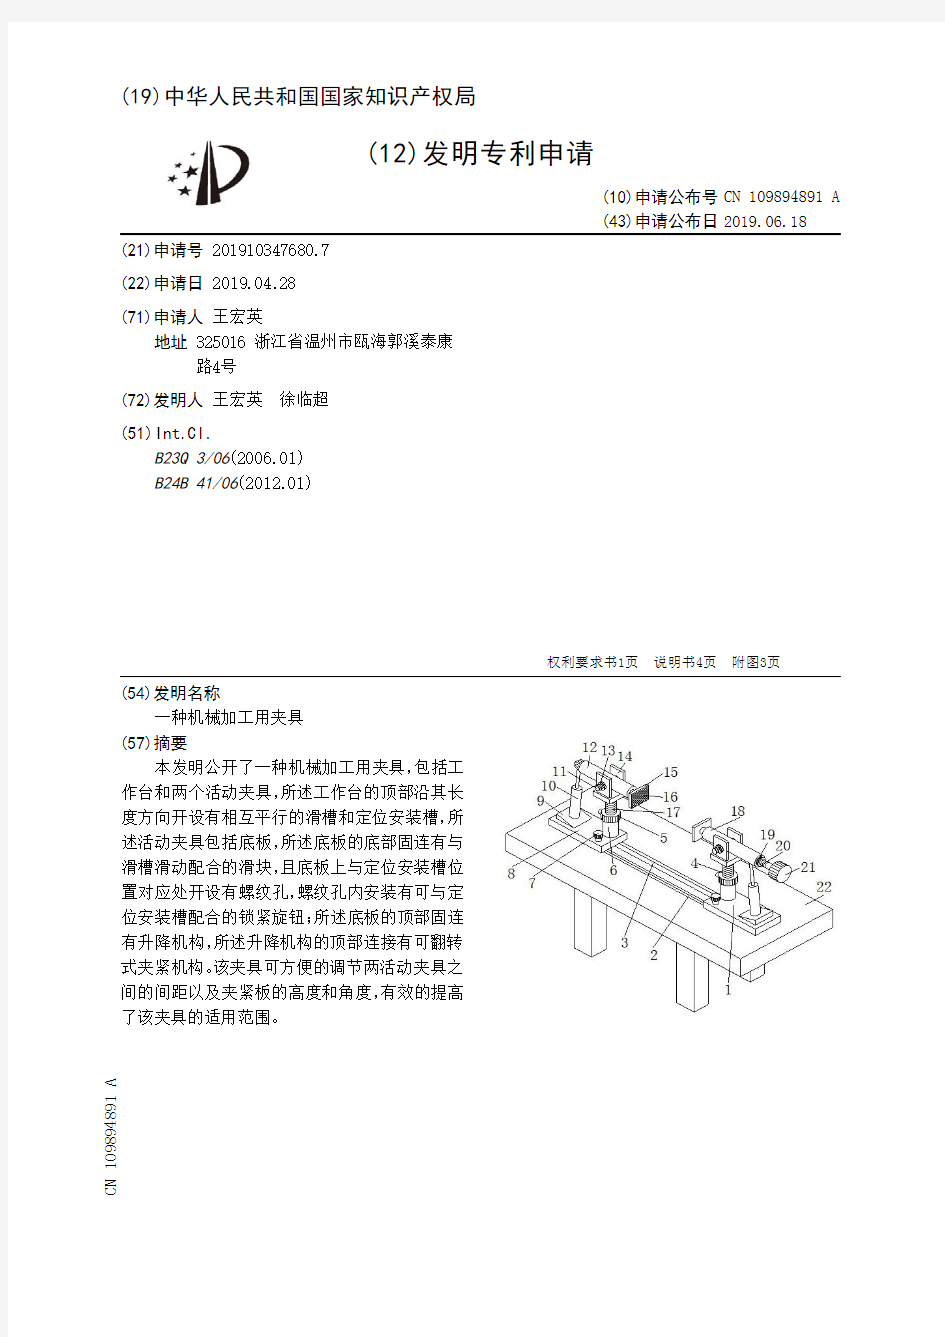 【CN109894891A】一种机械加工用夹具【专利】